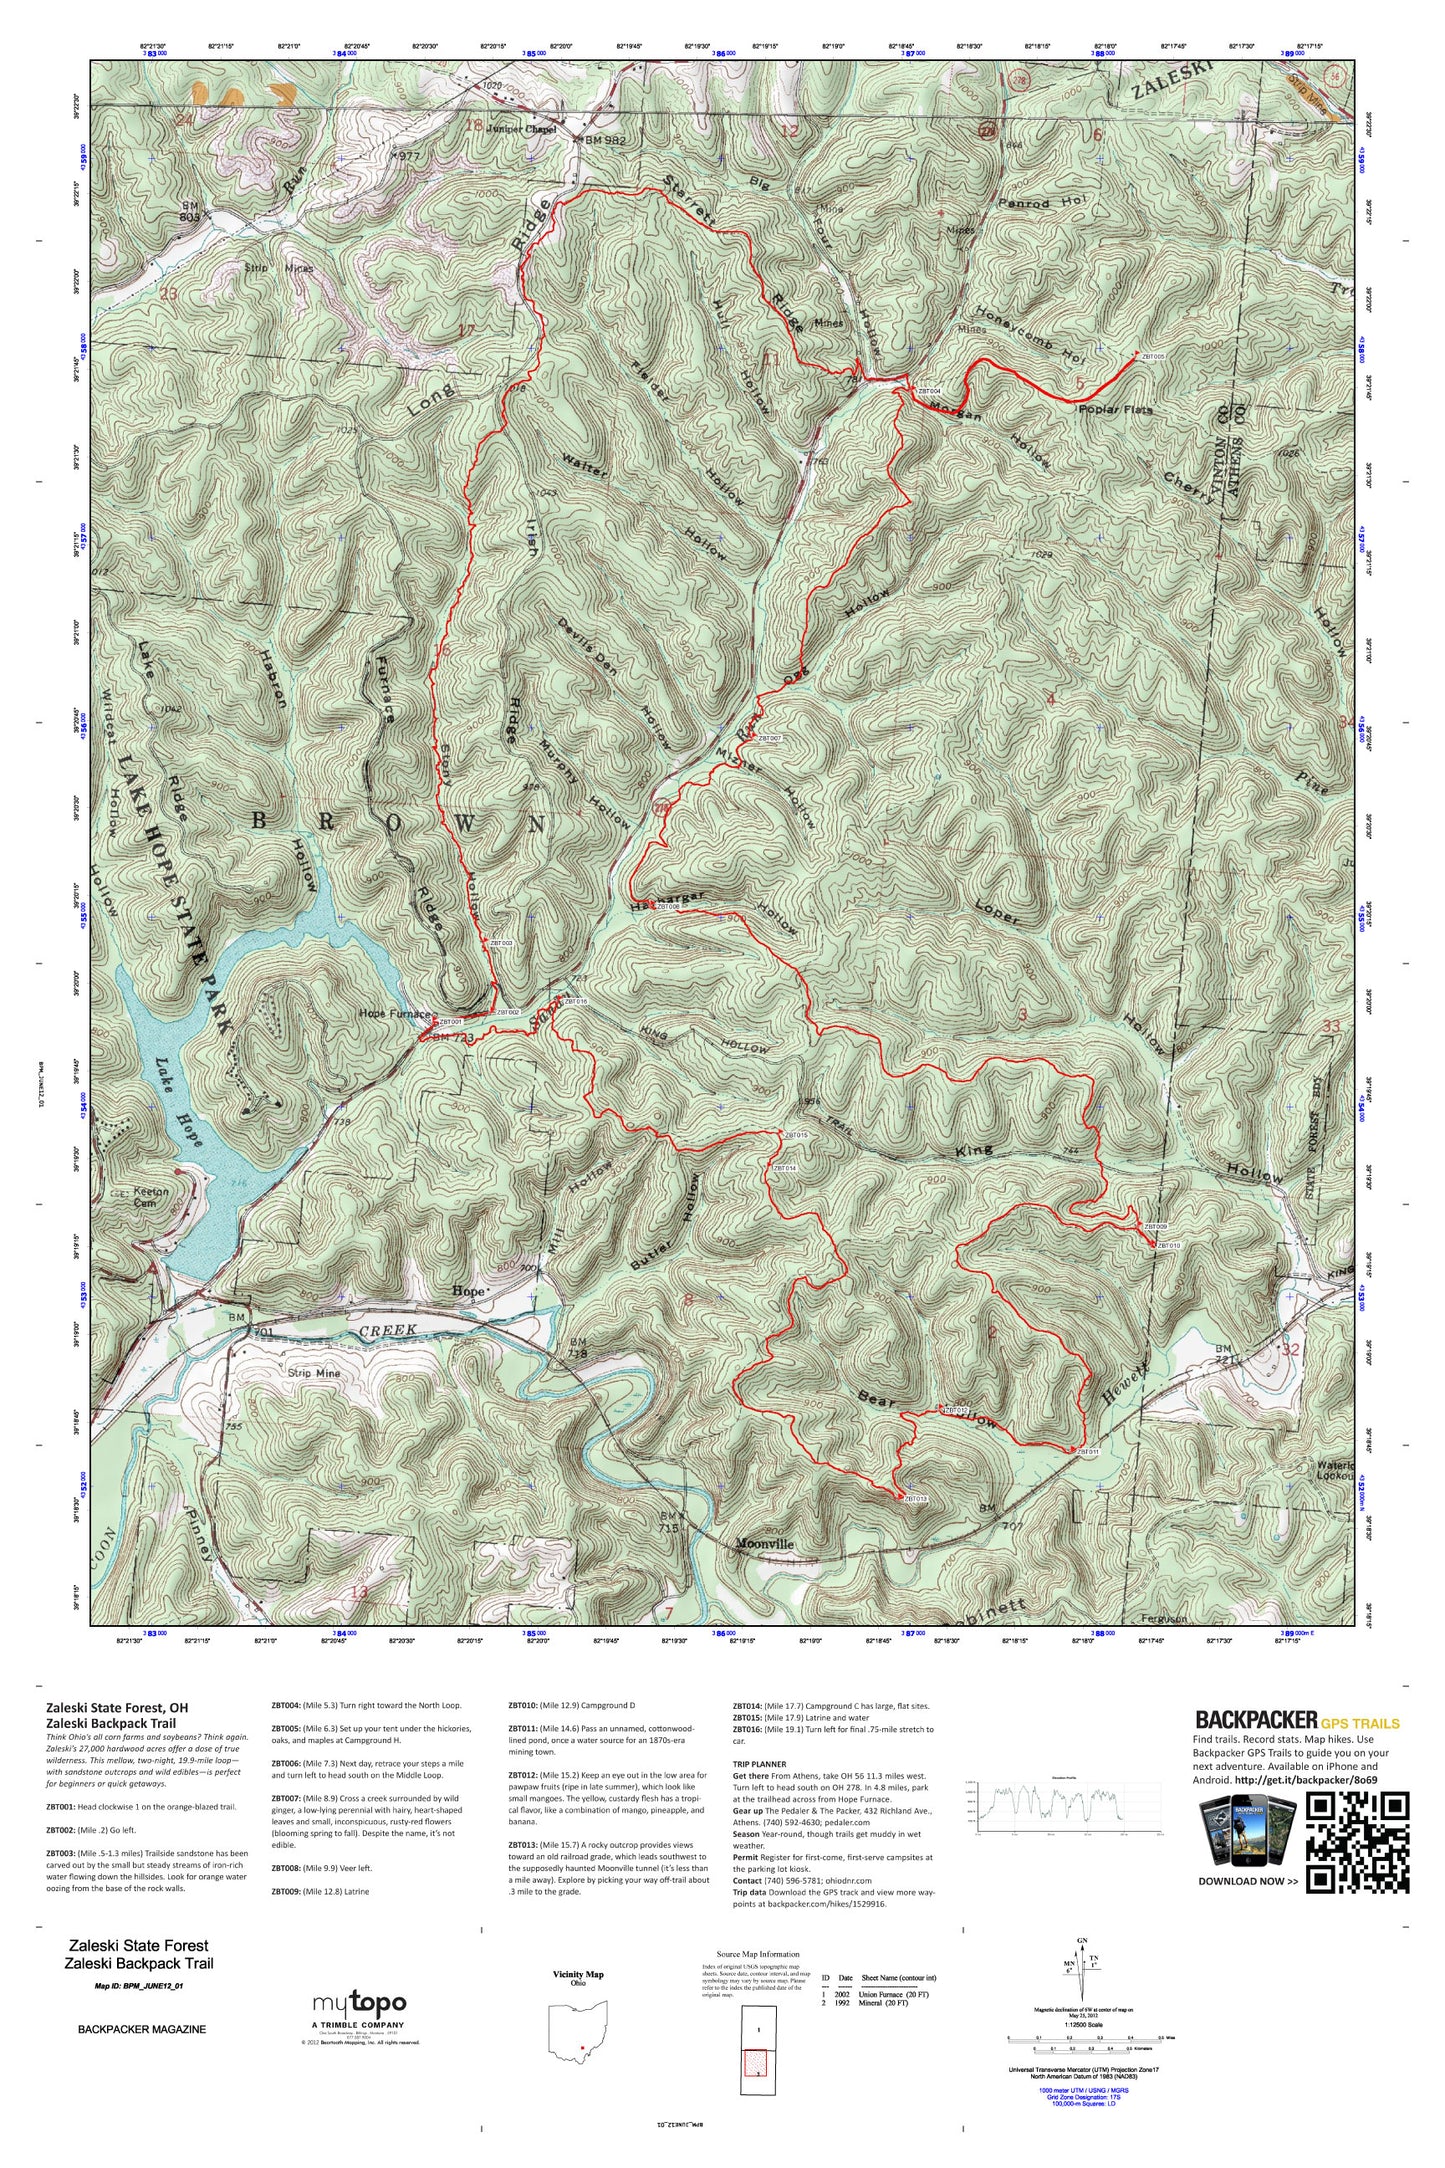 Zaleski State Forest Map (Ohio) Image